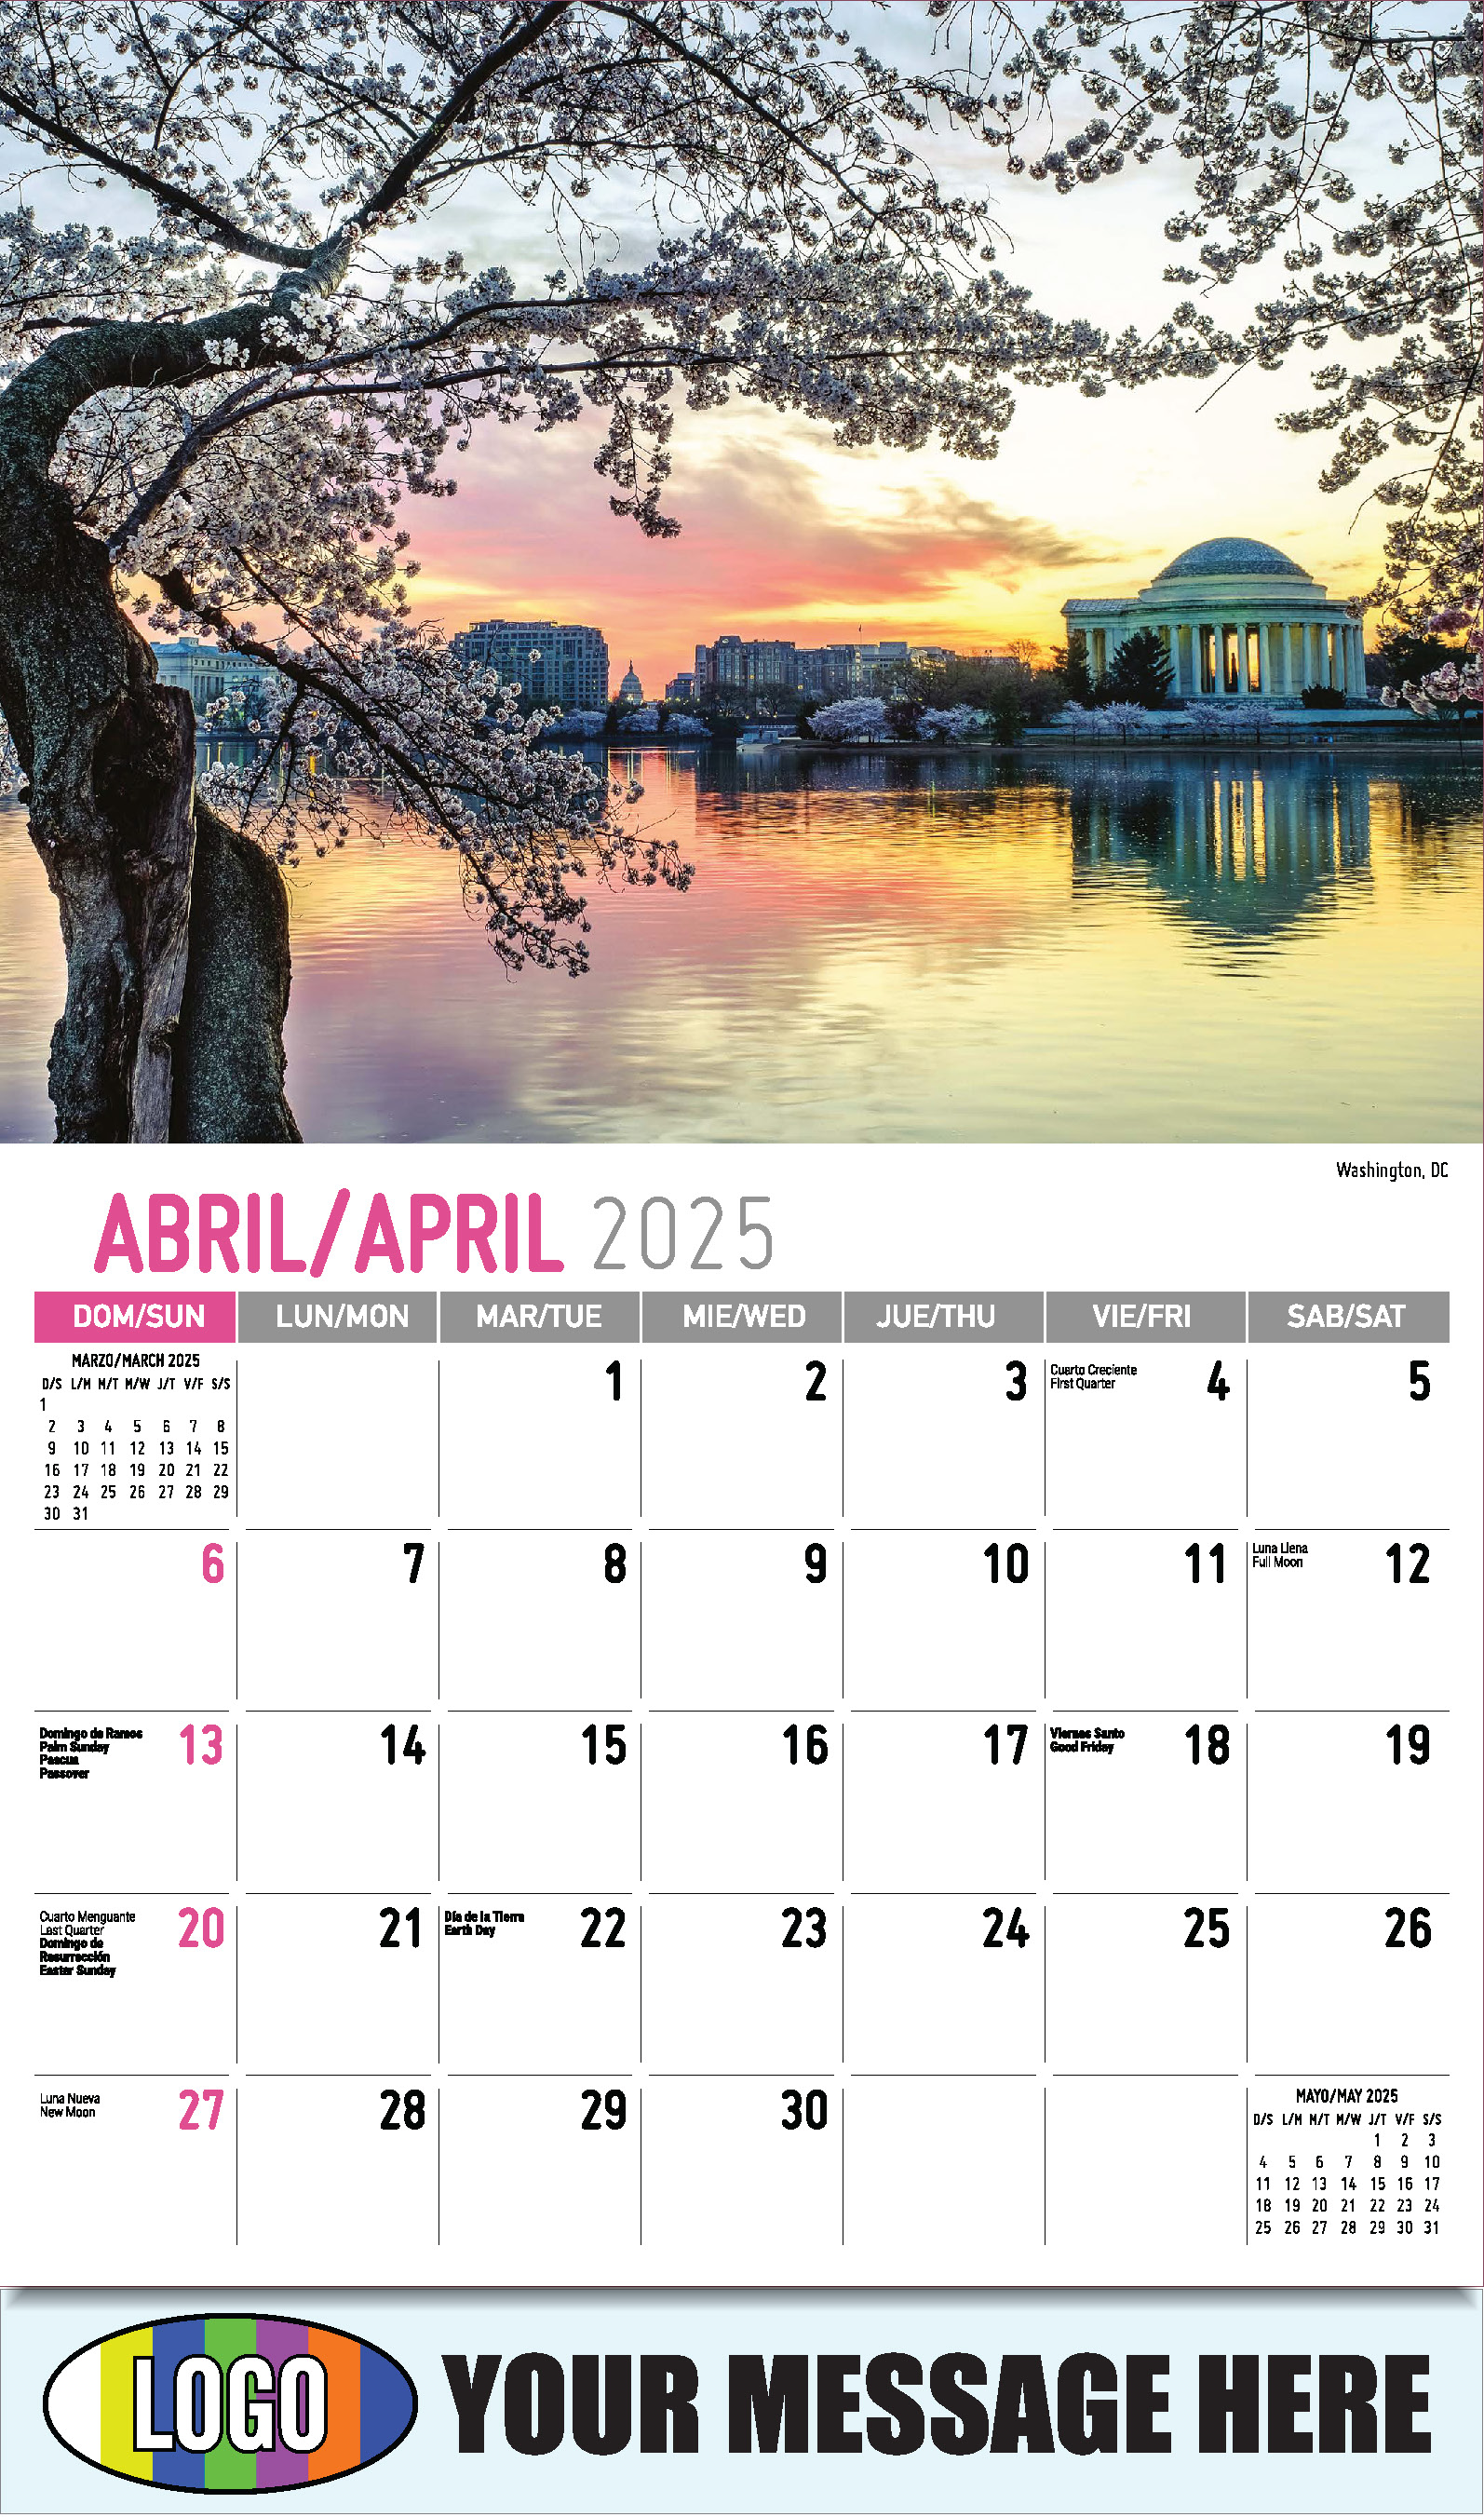 Scenes of America 2025 Bilingual Business Promo Calendar - April